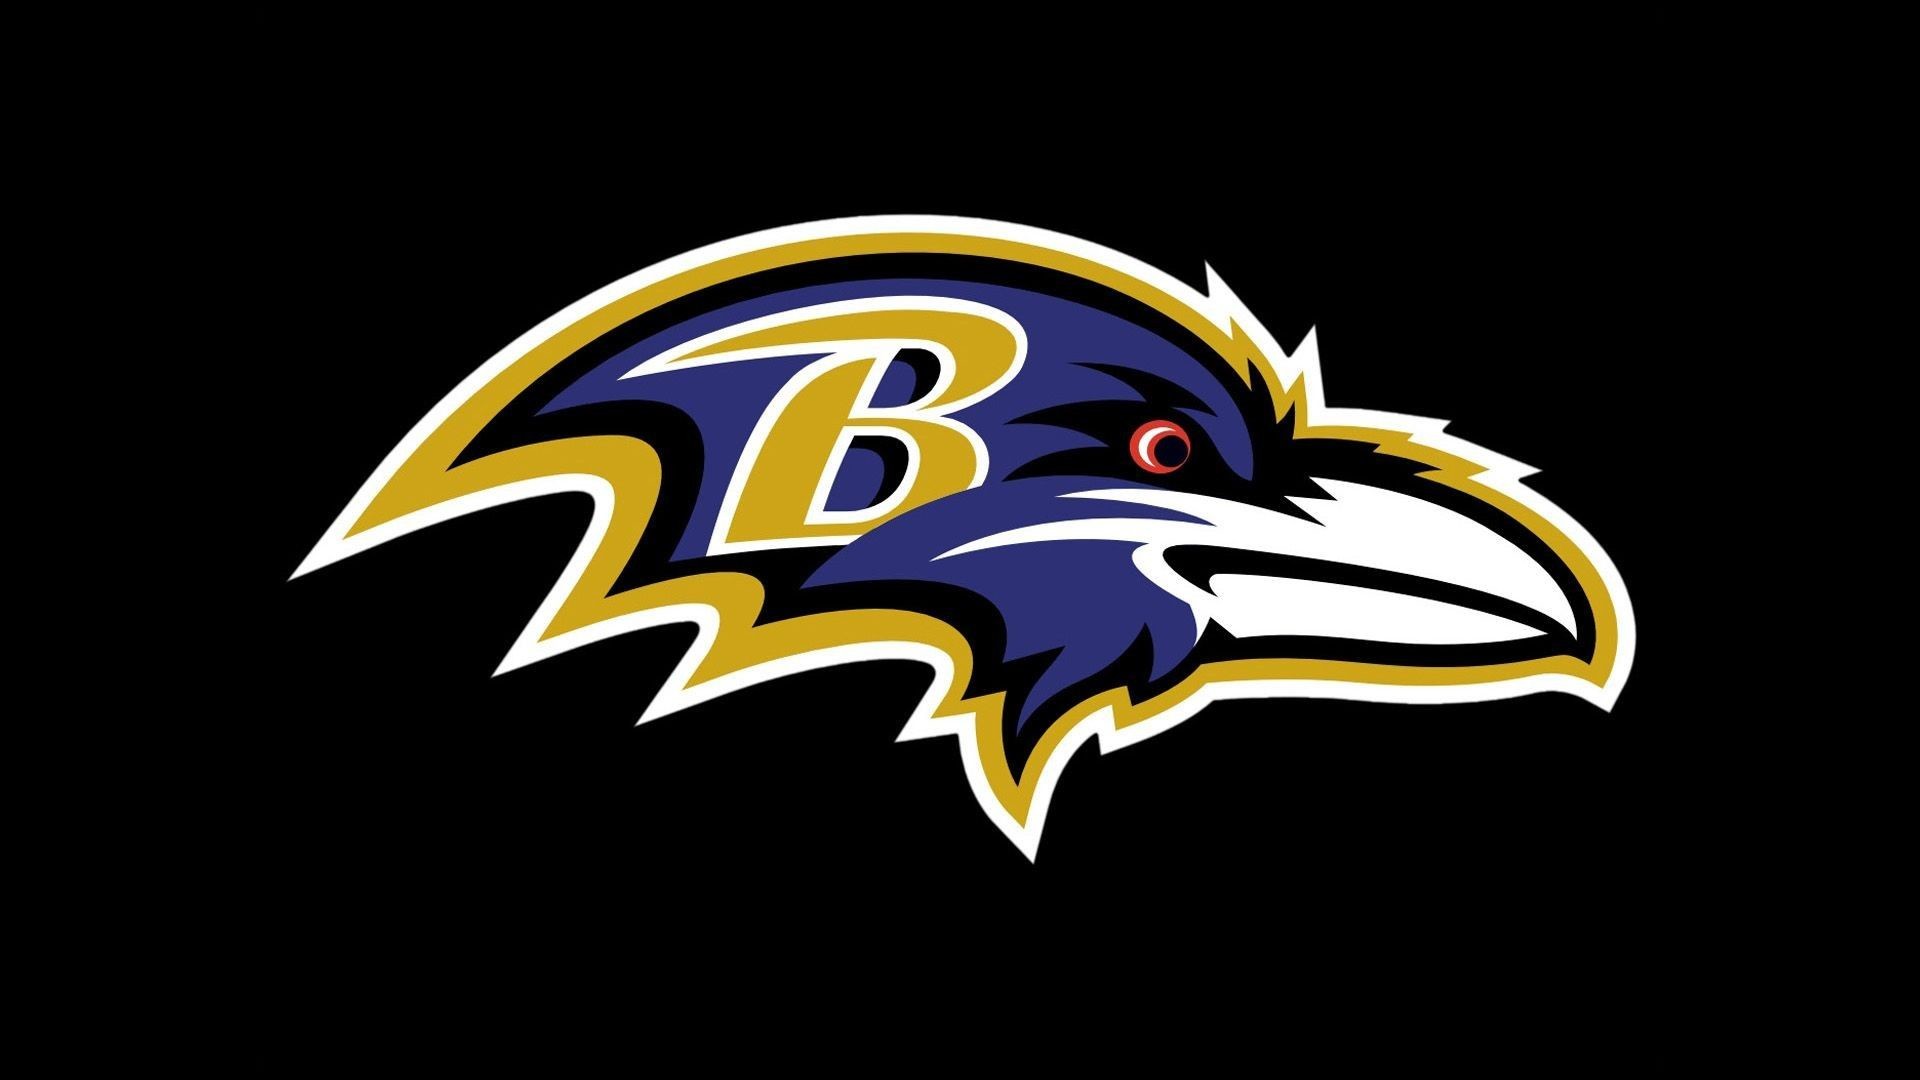 1920x1080 Baltimore Ravens For Desktop Wallpaper | Best NFL Wallpapers